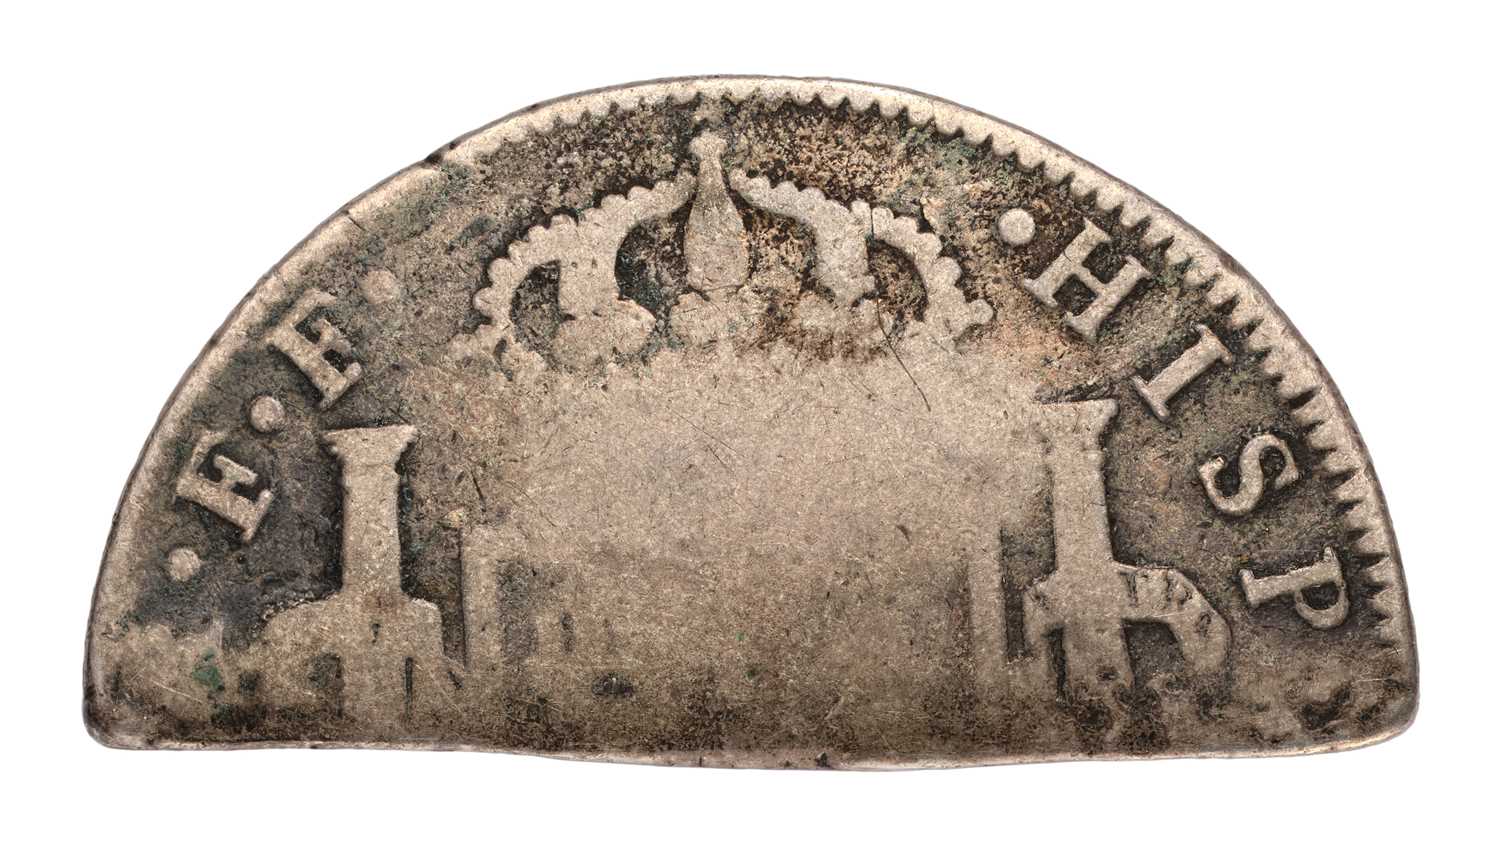 Virgin Islands, Tortola, Half Dollar 1801, 13.45g, type 1, half cut section of Spanish Empire, - Image 2 of 2